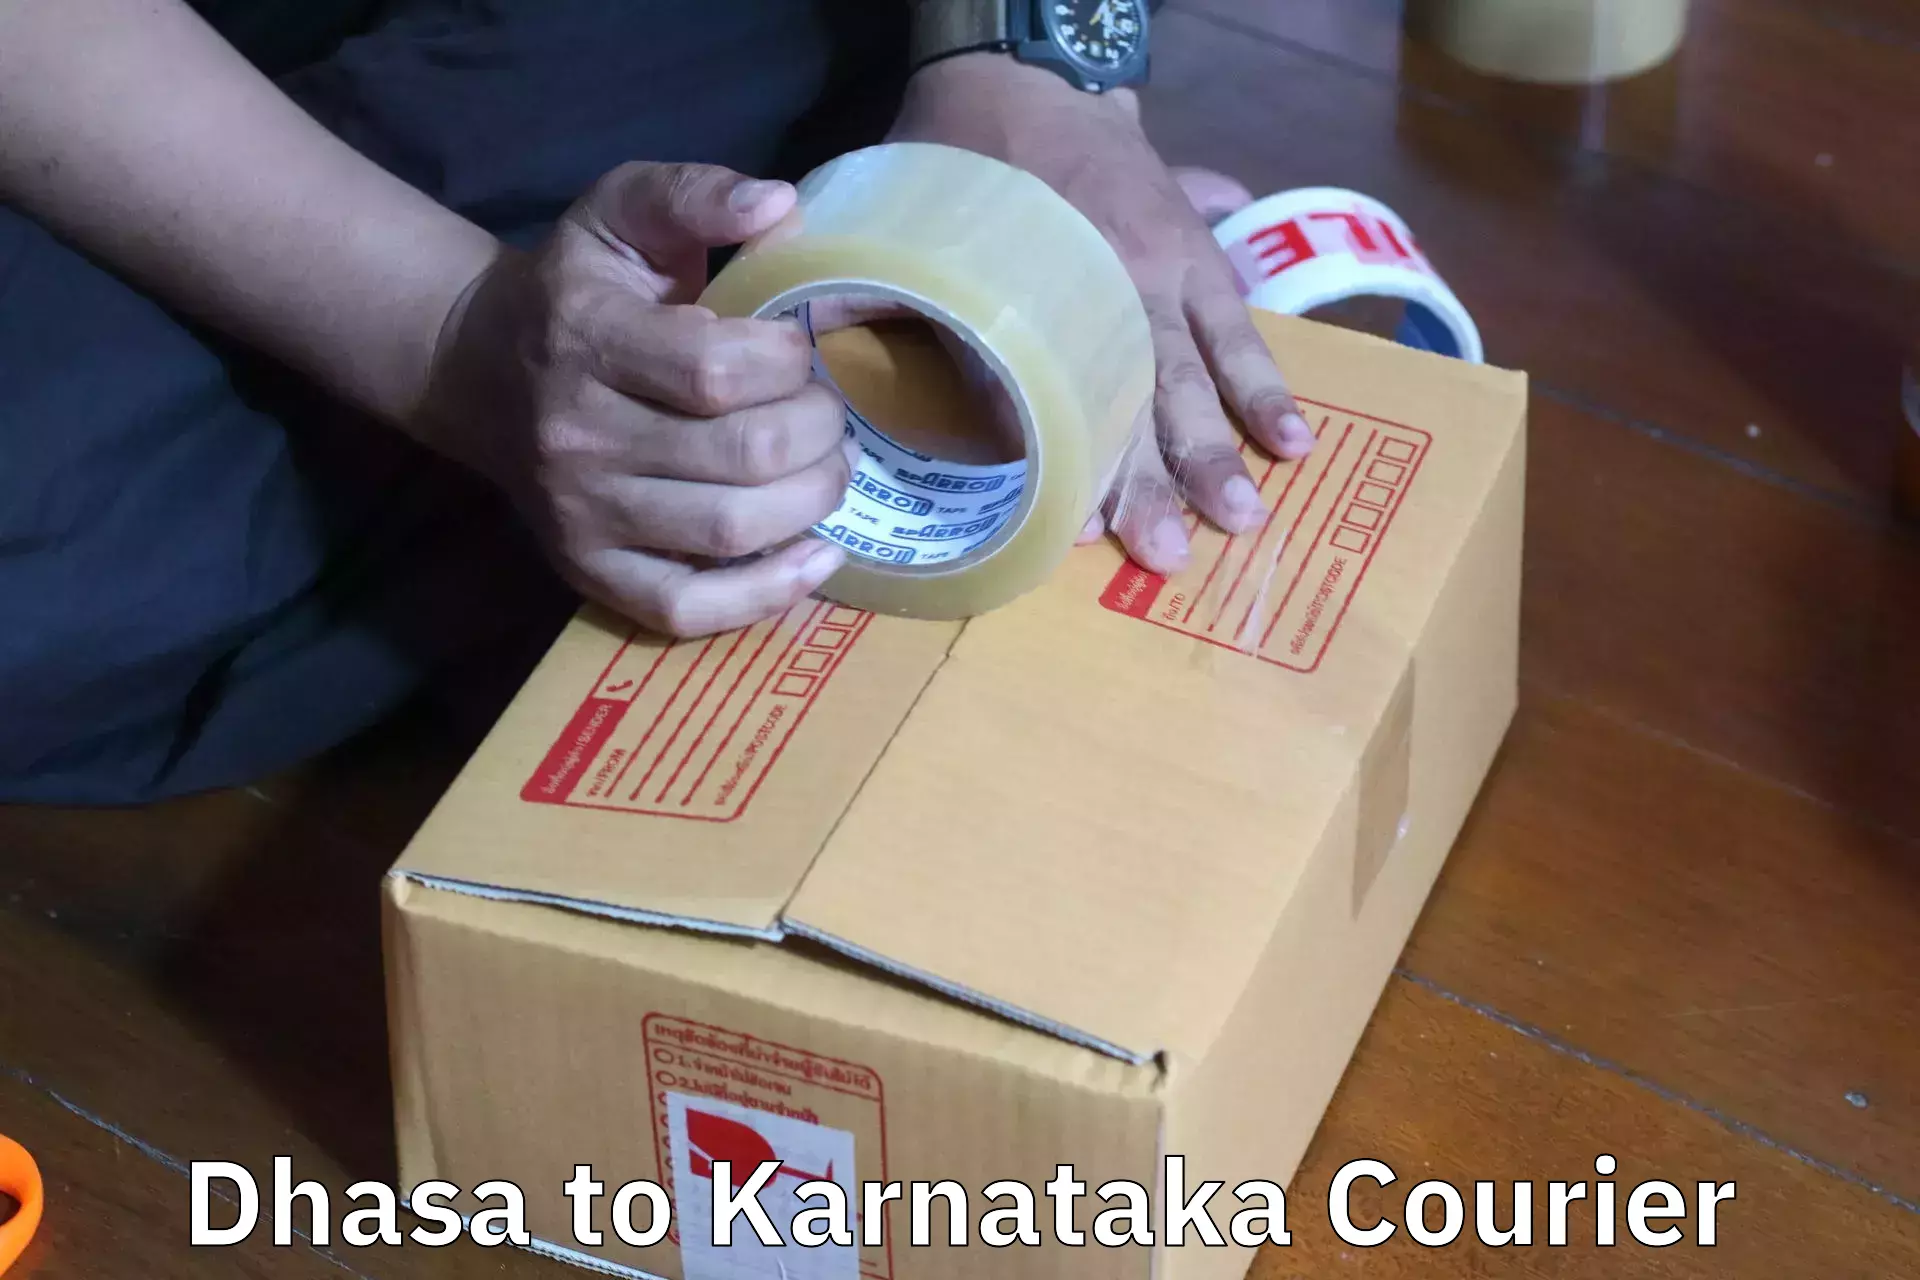 Full-service movers Dhasa to Karnataka